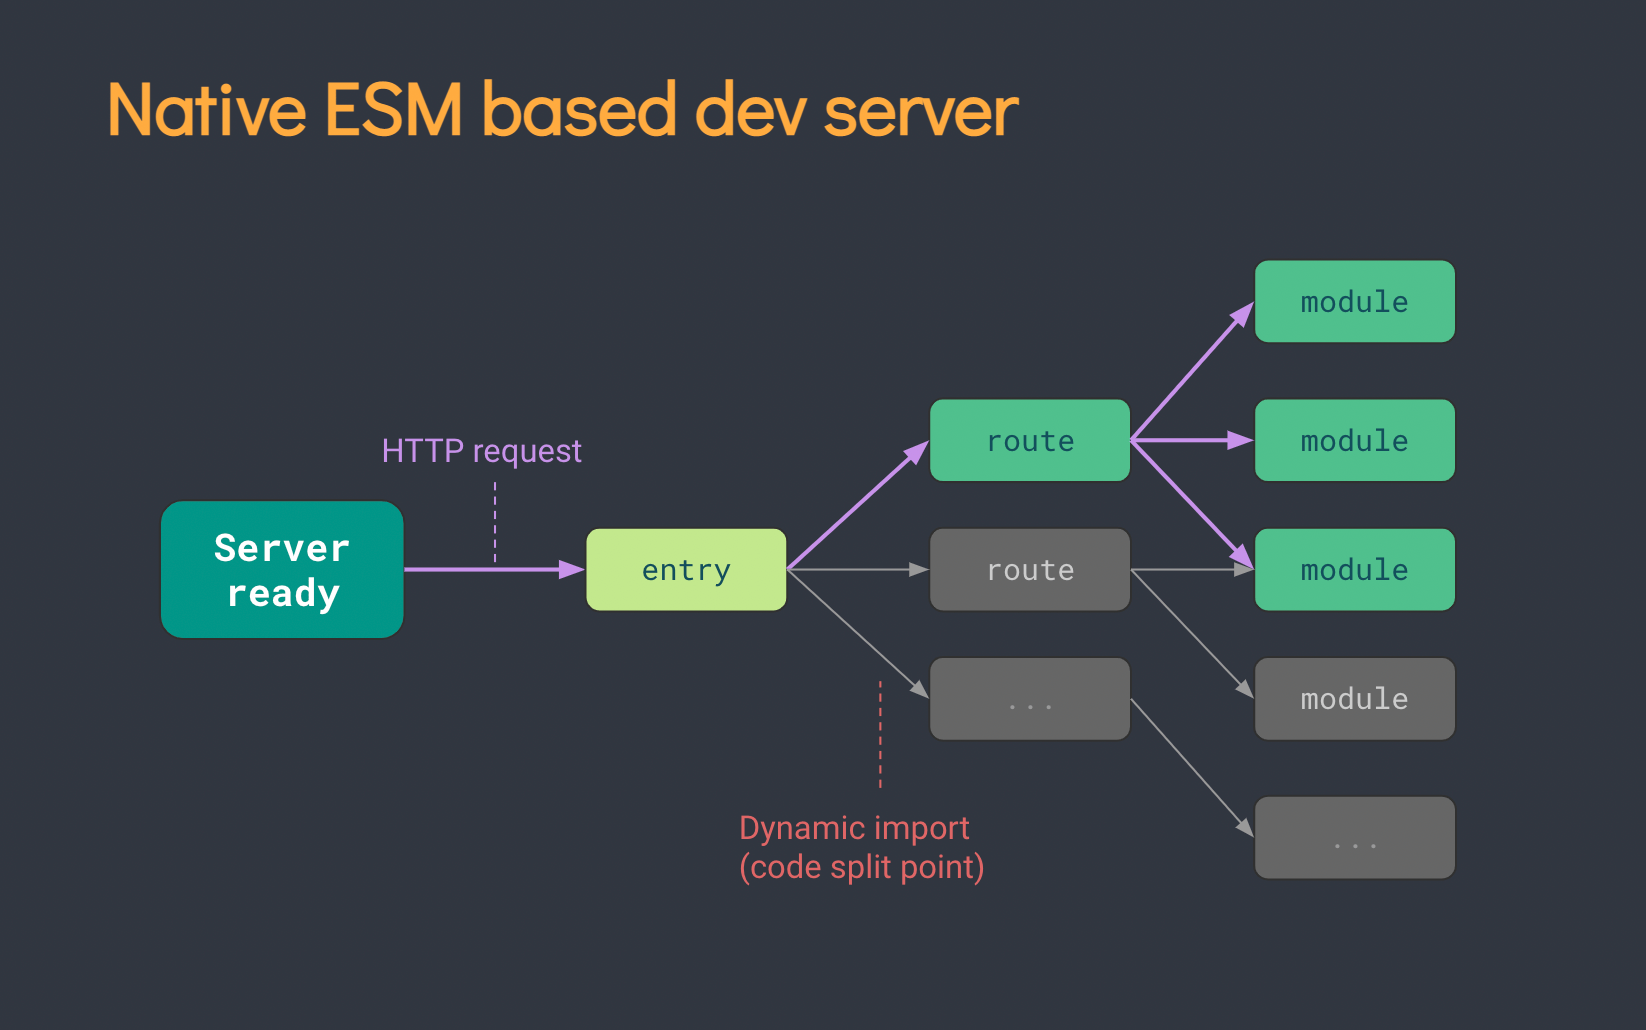 Native ESM based dev server diagram shows server ready > http request > entry > dynamic import (code split point) > multiple routes > multiple modules